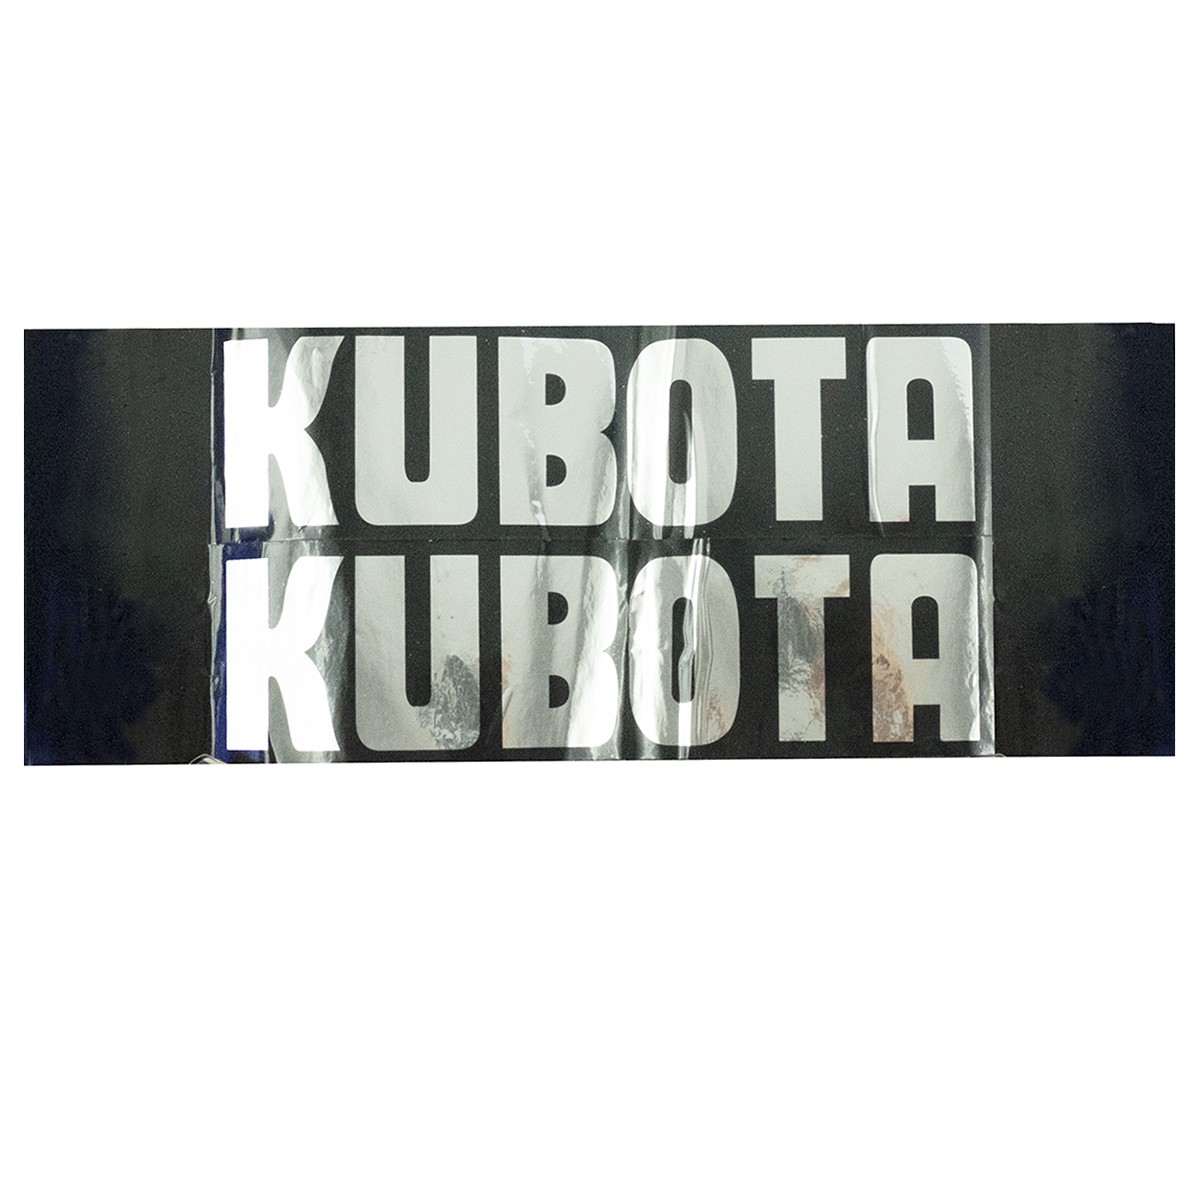 Autocollants Kubota B, Kubota B5000, B5001, B6000, B6001, B7000, B7001